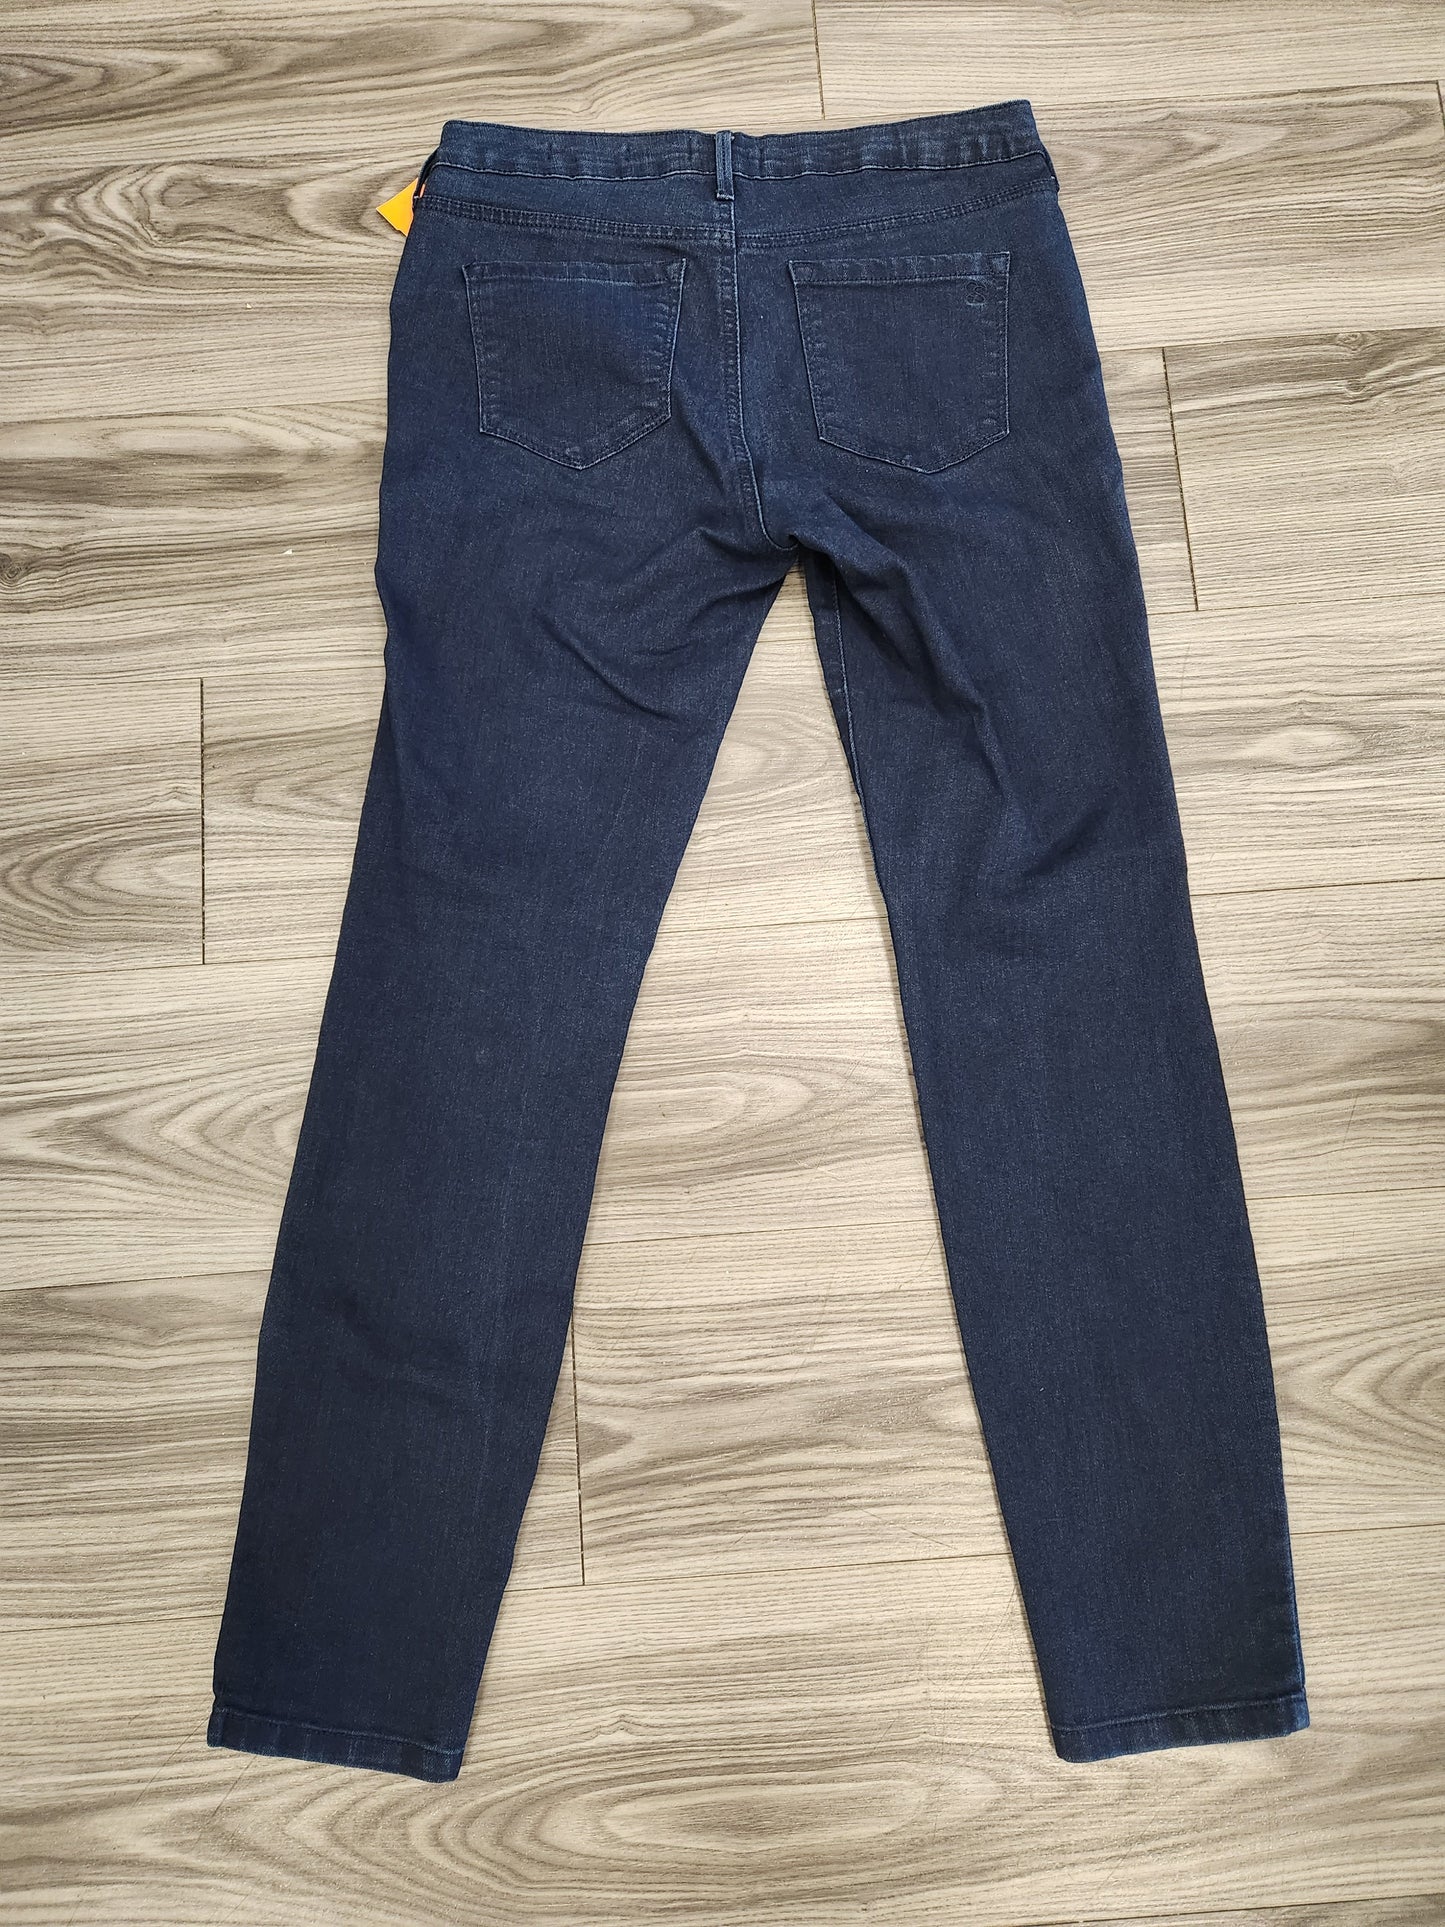 Jeans Skinny By Jessica Simpson  Size: 8